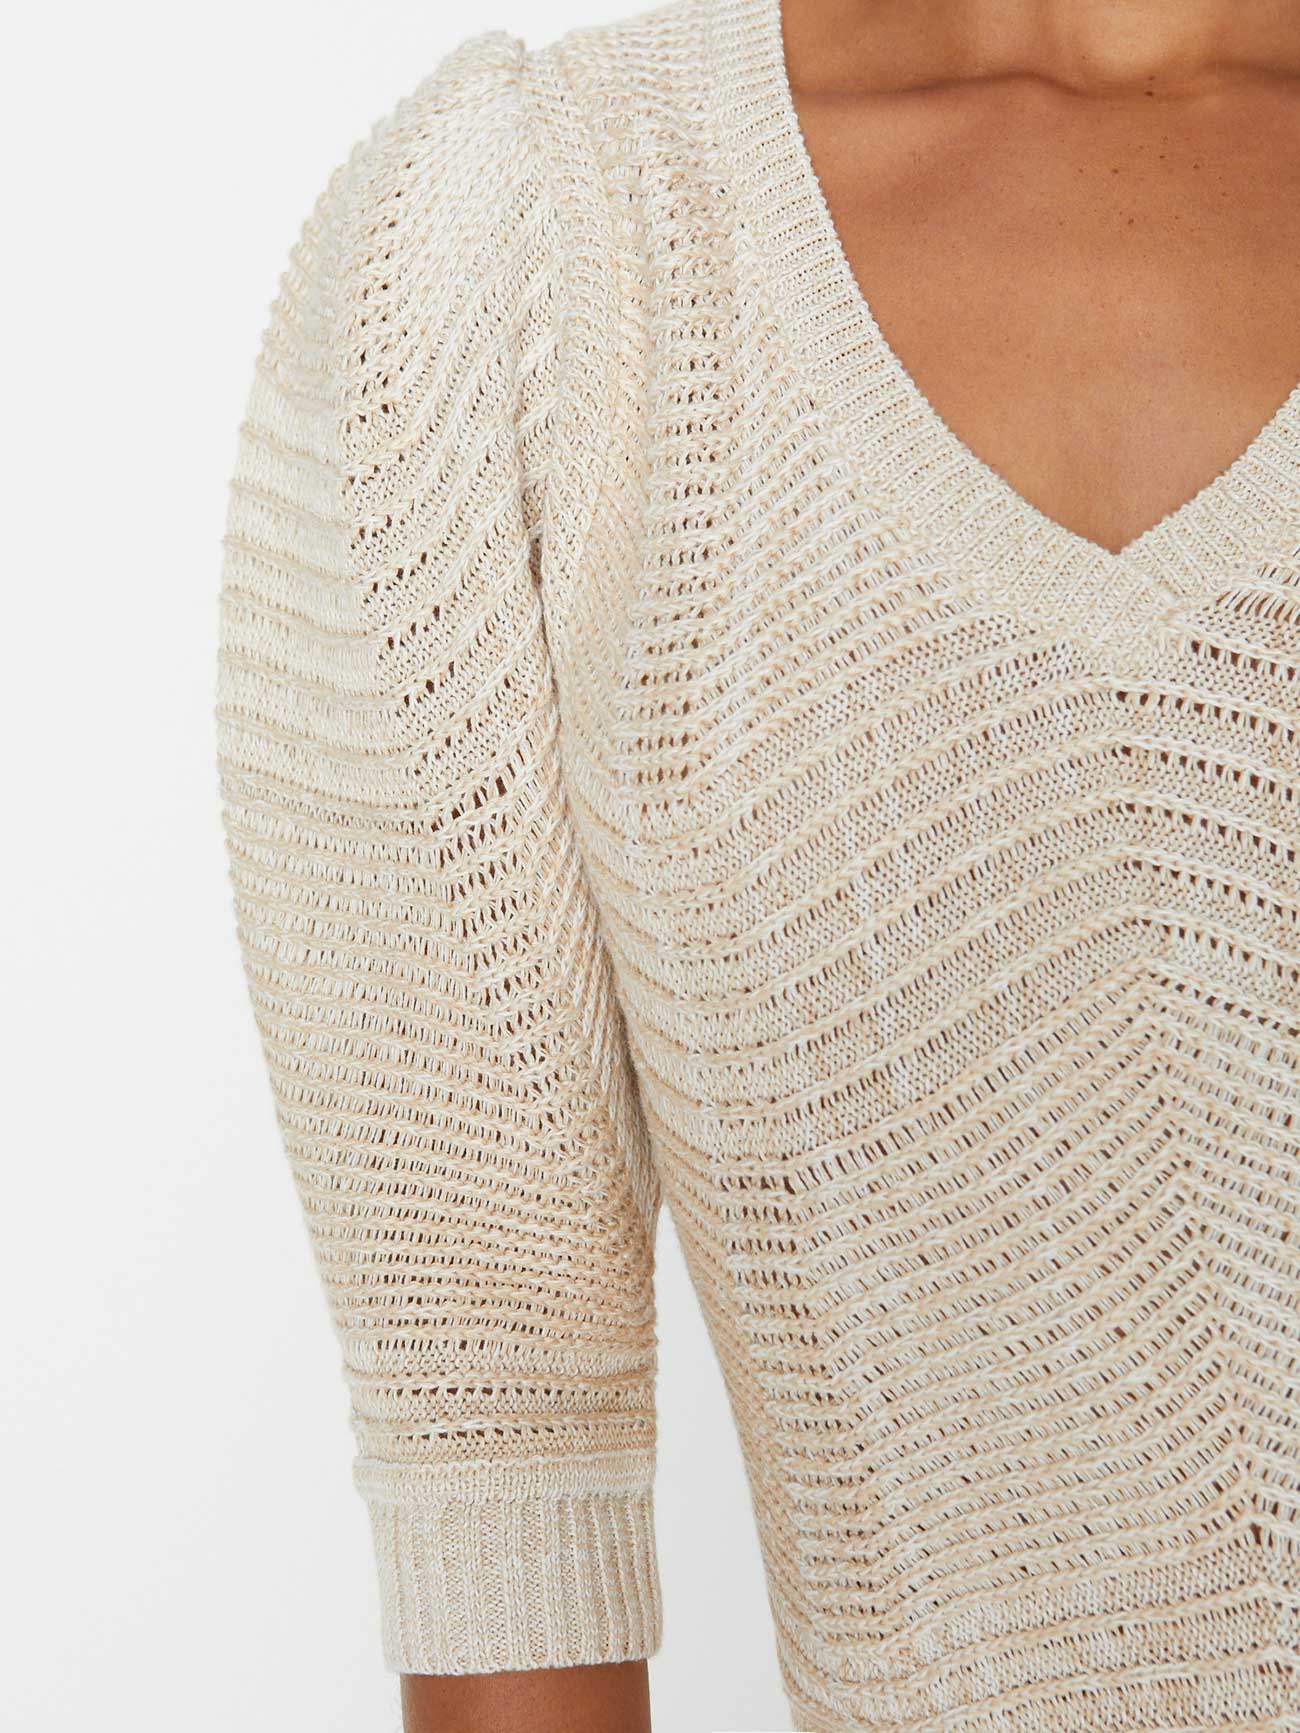 The Arya Vee Sweater